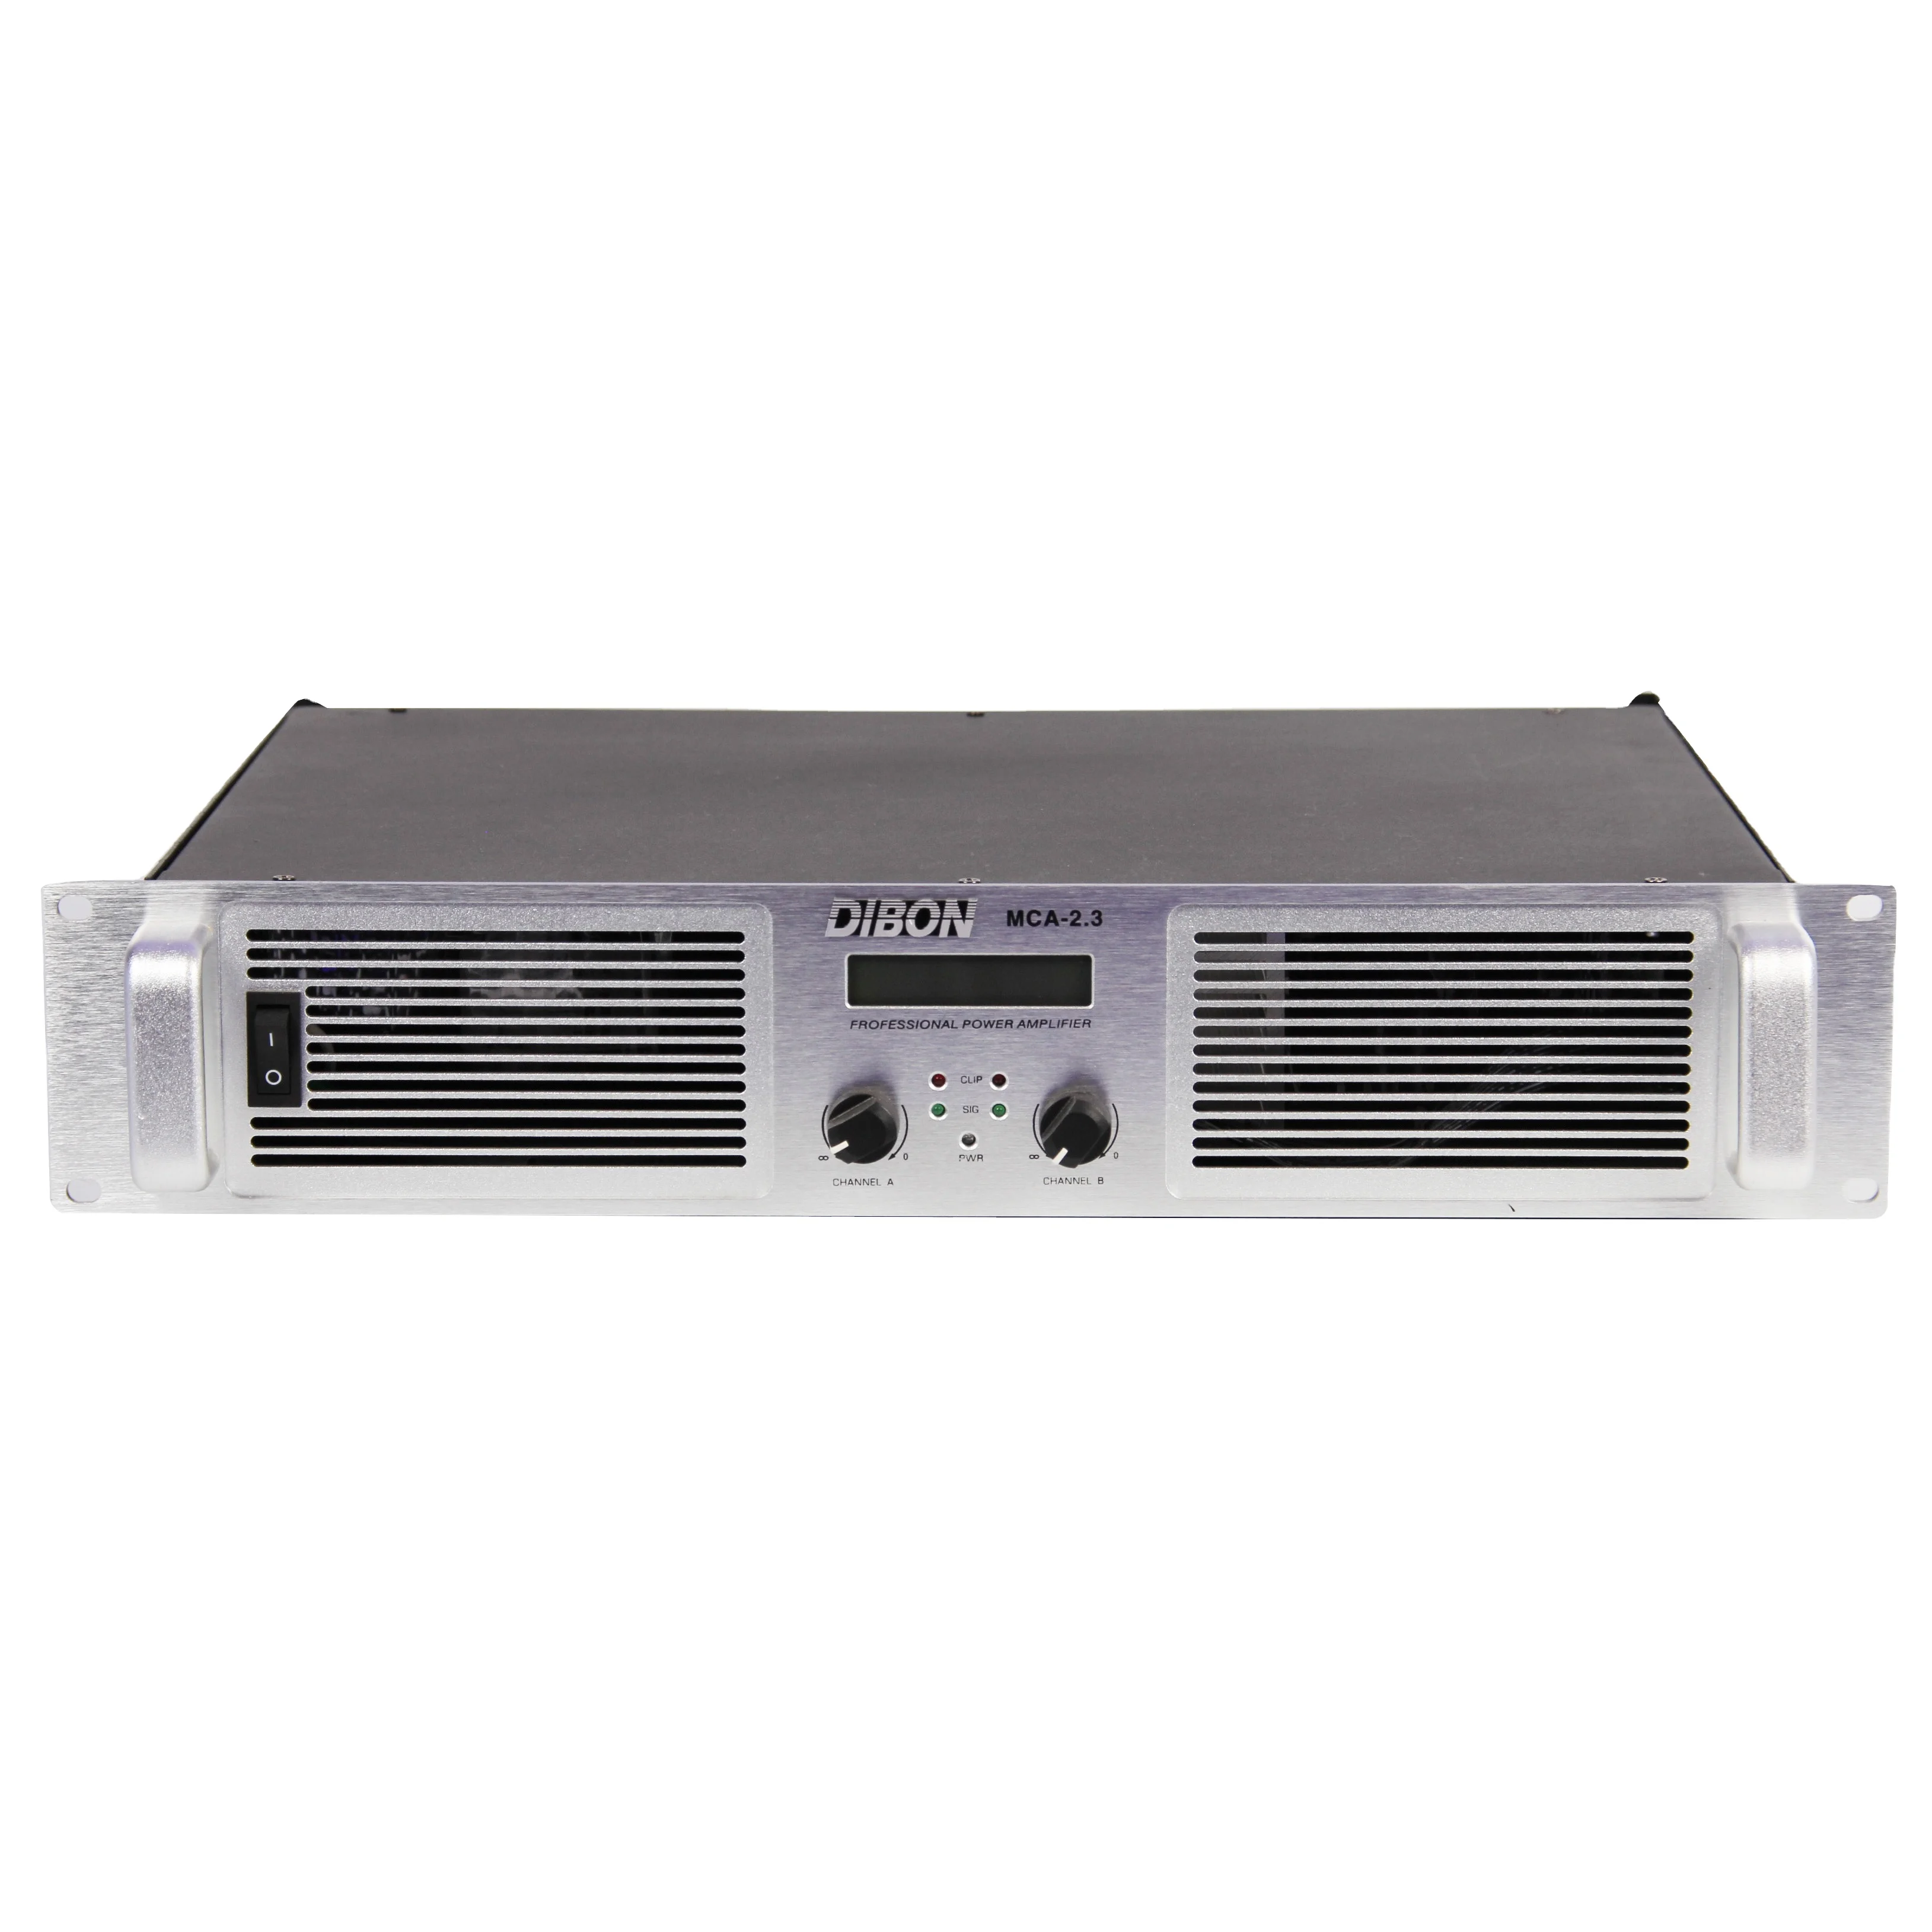 Professional Amplifier Public Address System Amplifier MCA-7.3 400 watts digital audio professional power amplifier for public address system